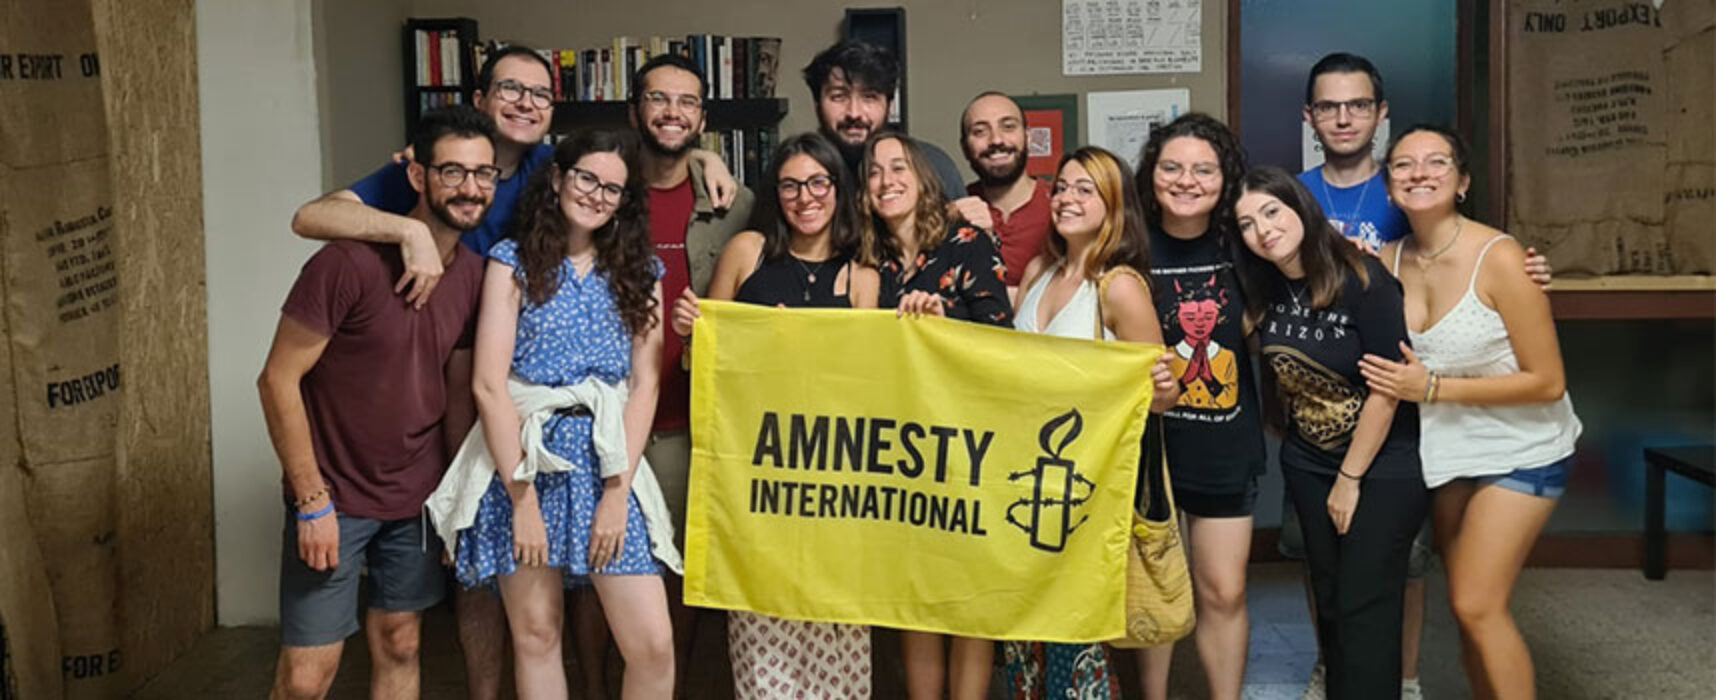 Amnesty International Bisceglie presenta VIII edizione contest “Art for Rights” /BANDO